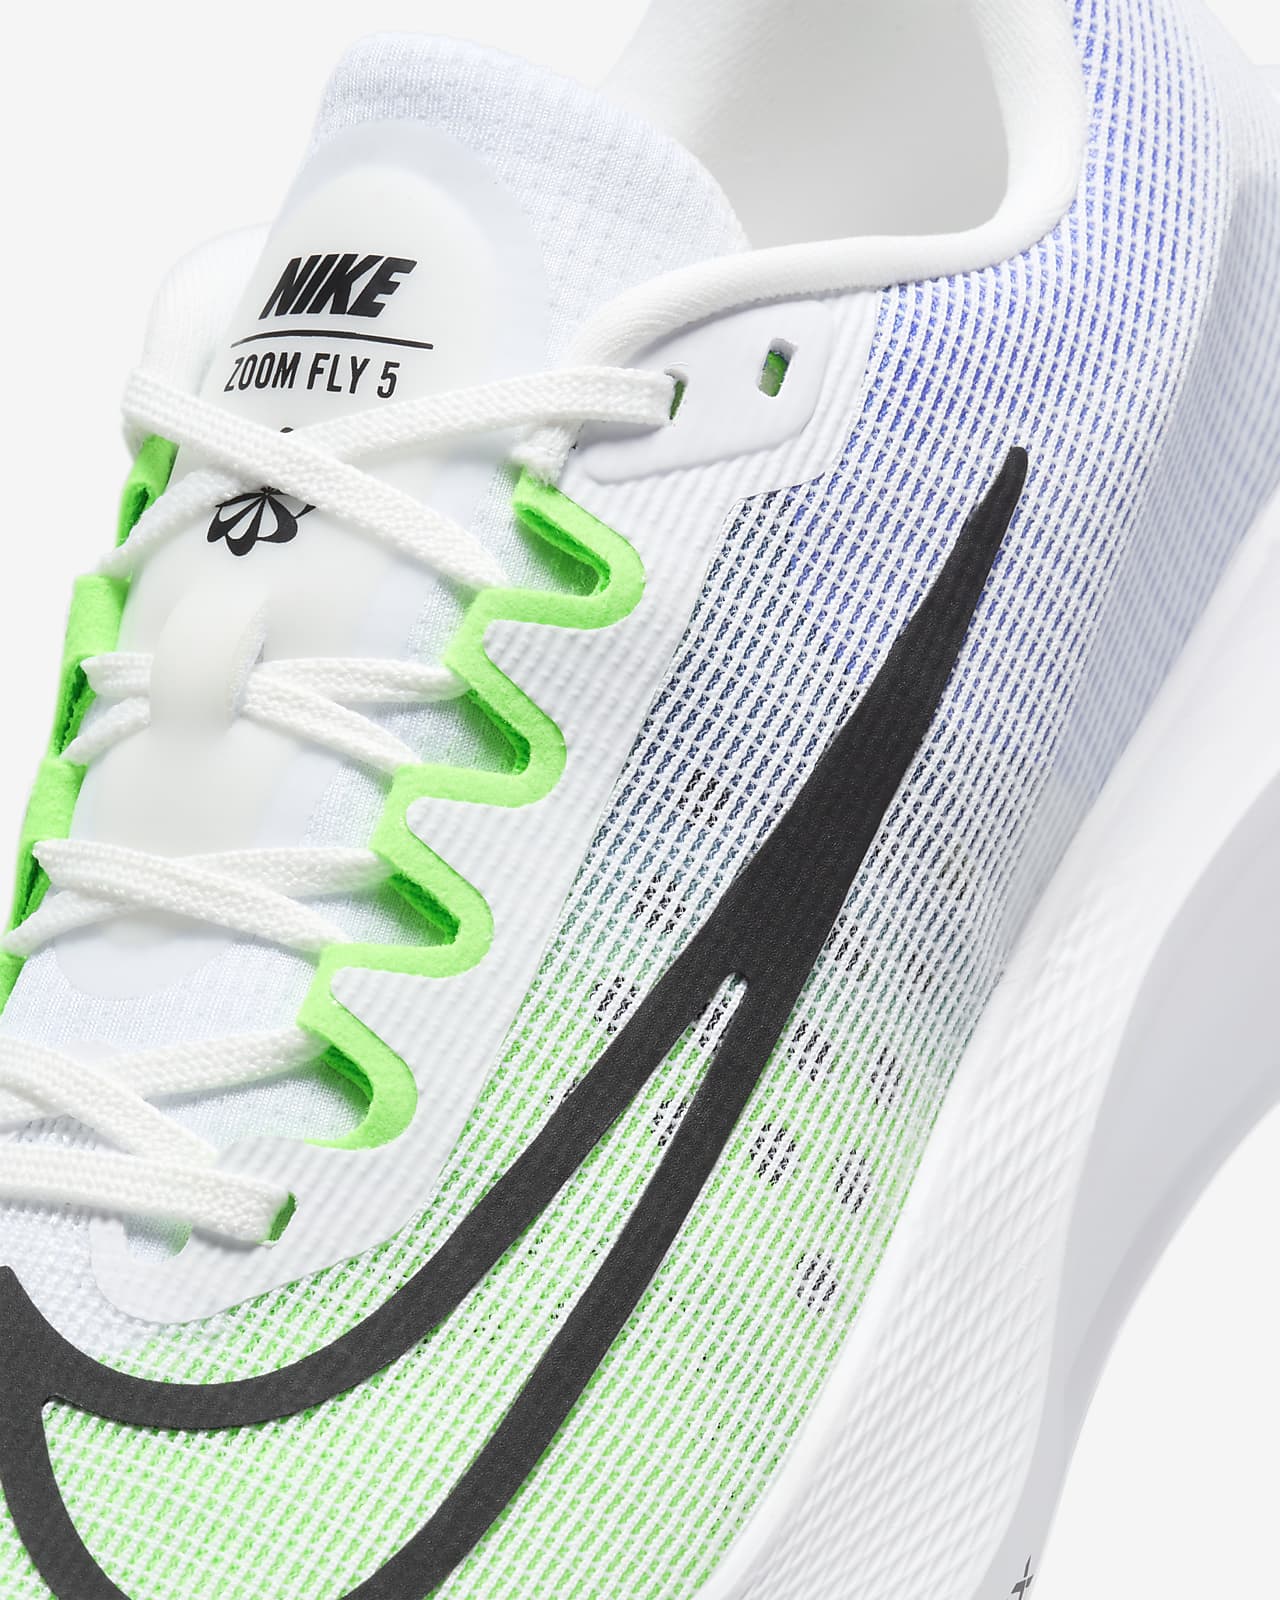 Nike Zoom Fly Flyknit 2 Review - Believe in the Run